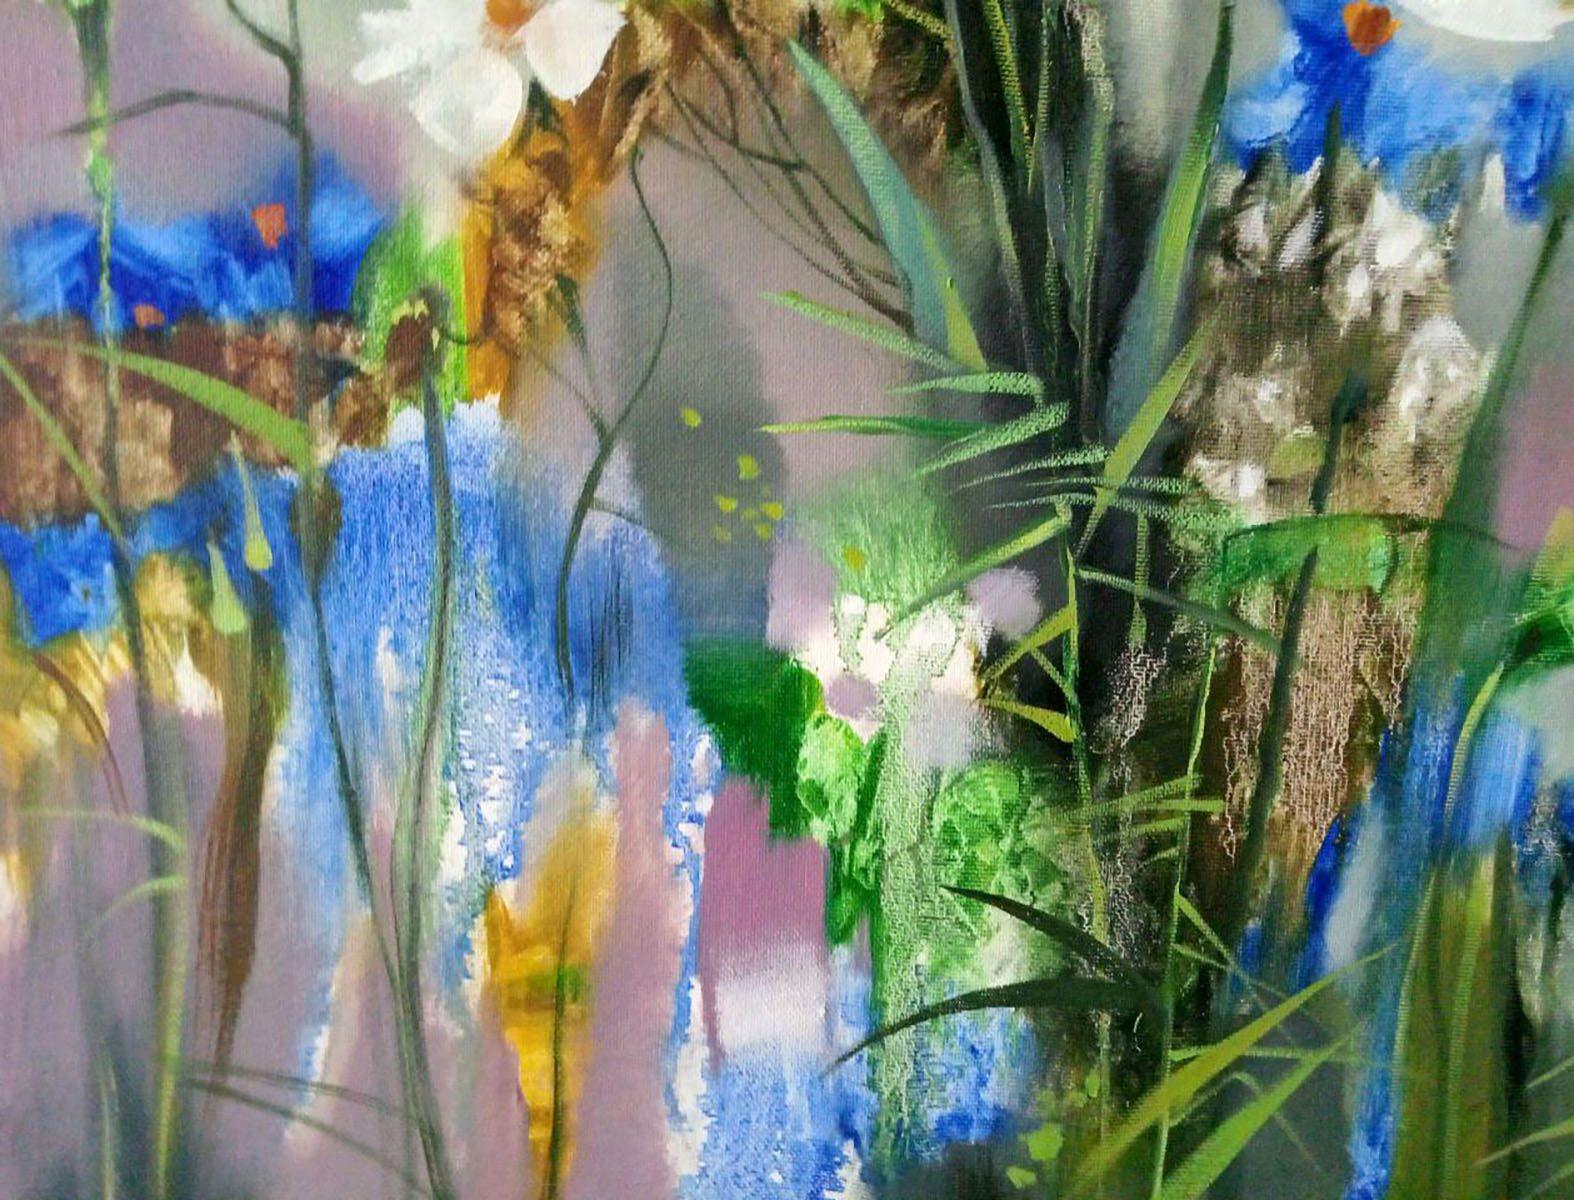 Artist: Anatoly Borisovich Tarabanov
Work: Original oil painting, handmade artwork, one of a kind 
Medium: Oil on Canvas 
Year: 2020
Style: Impressionism
Title: Dance of Flowers
Size: 23.5